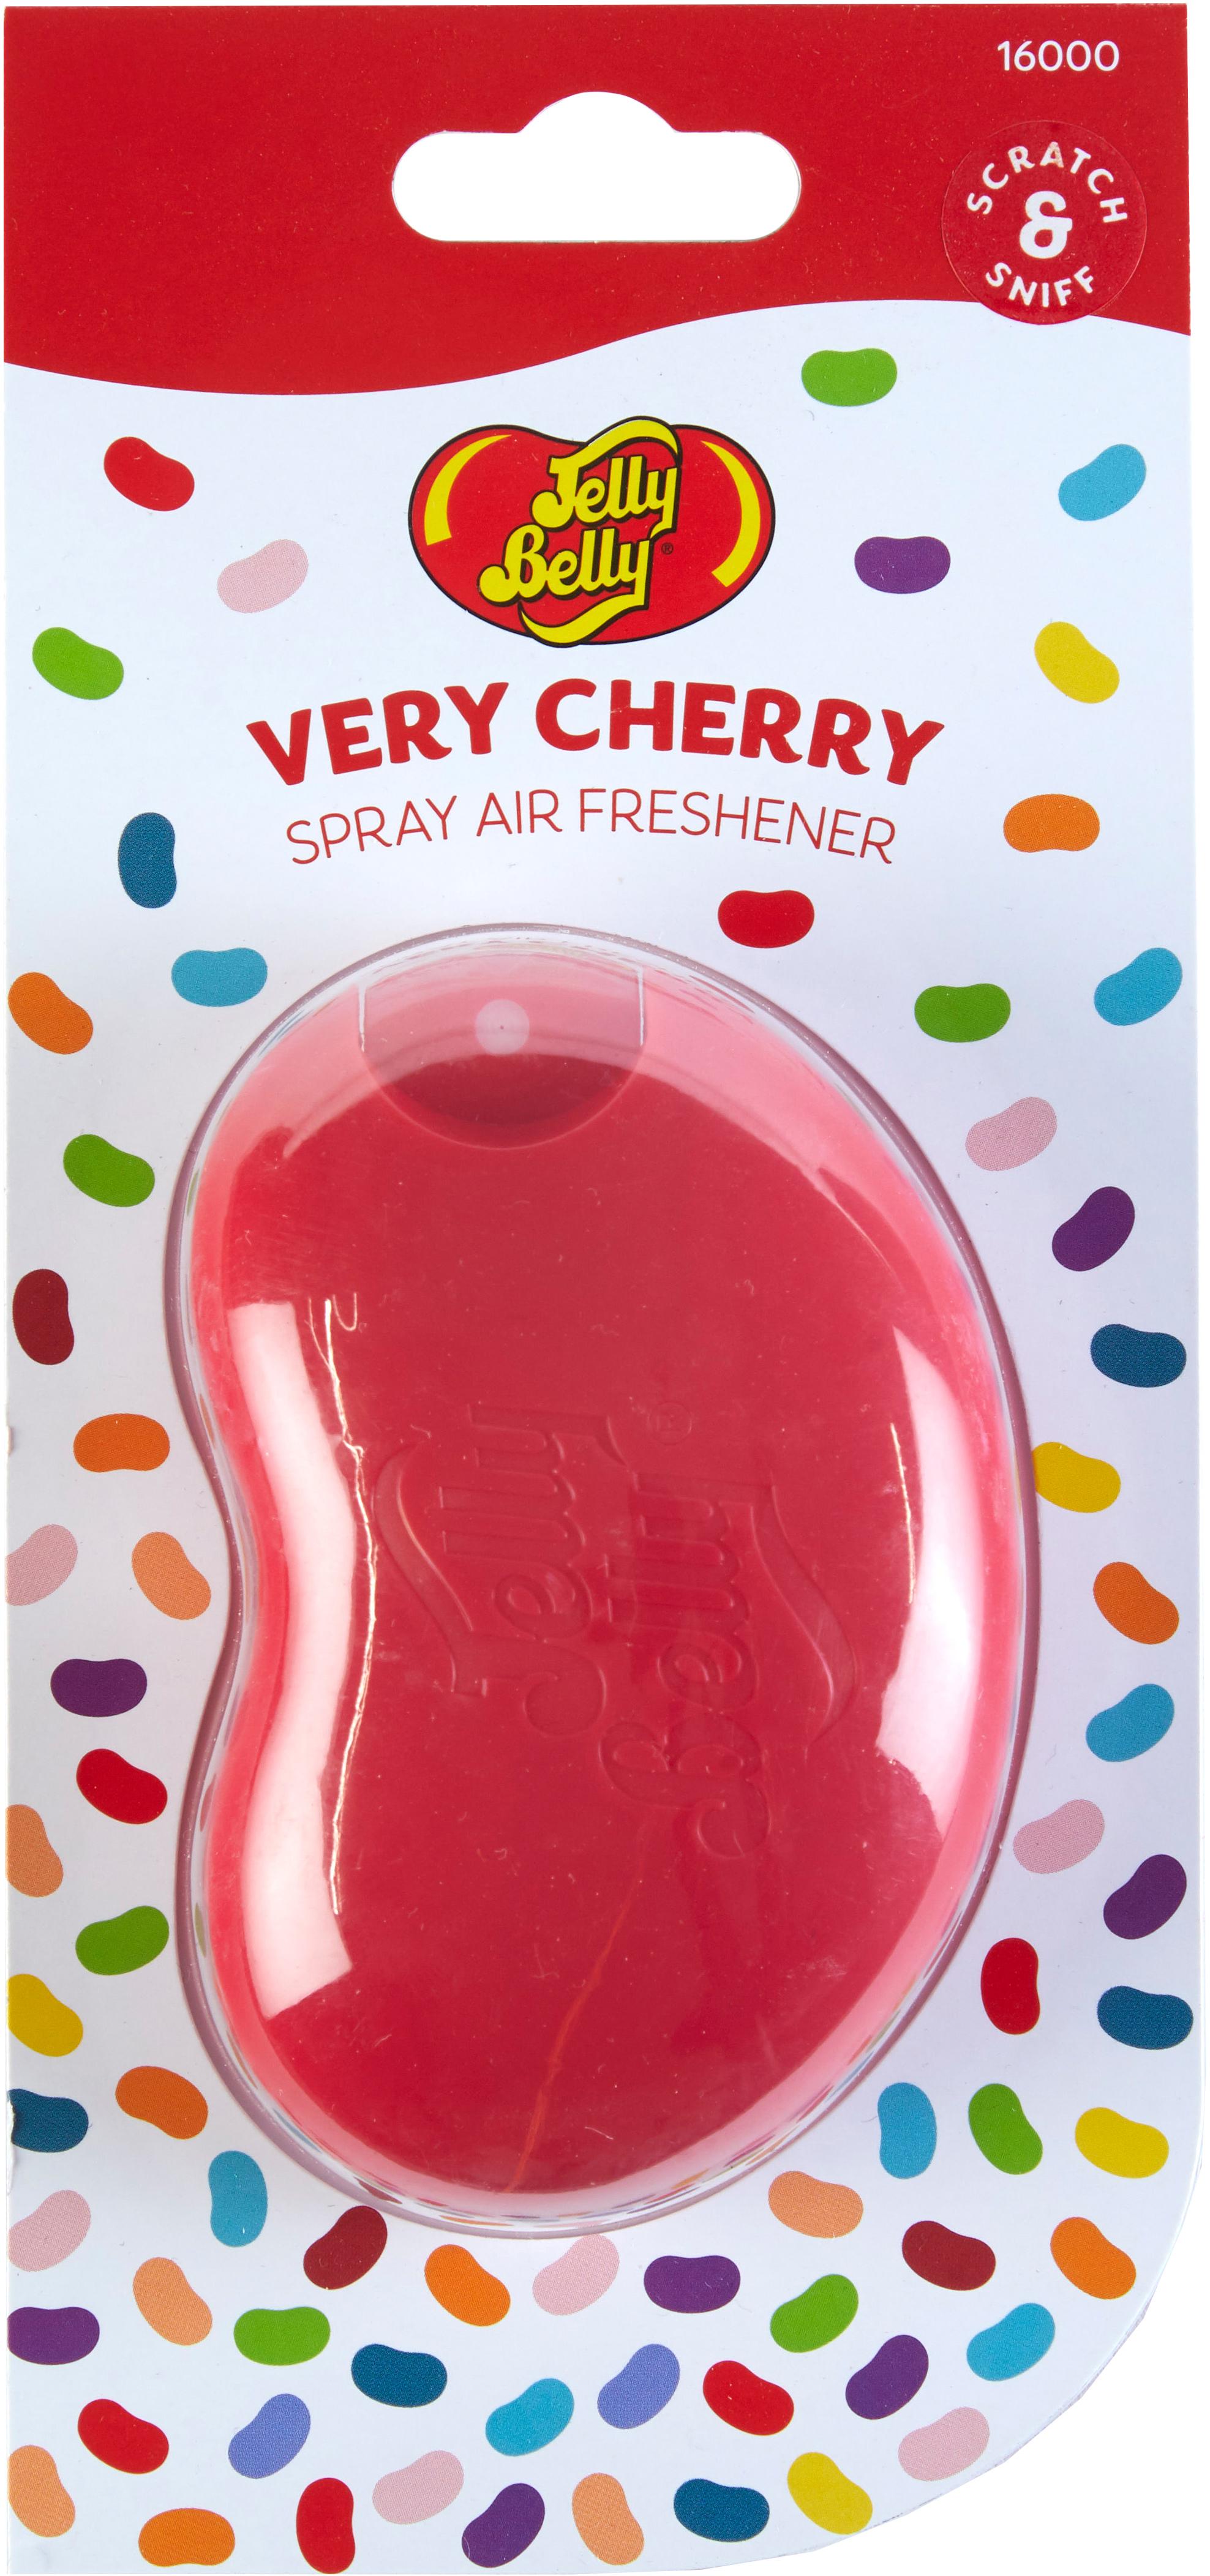 Jelly Belly Pump Spray - Very Cherry Air Freshener